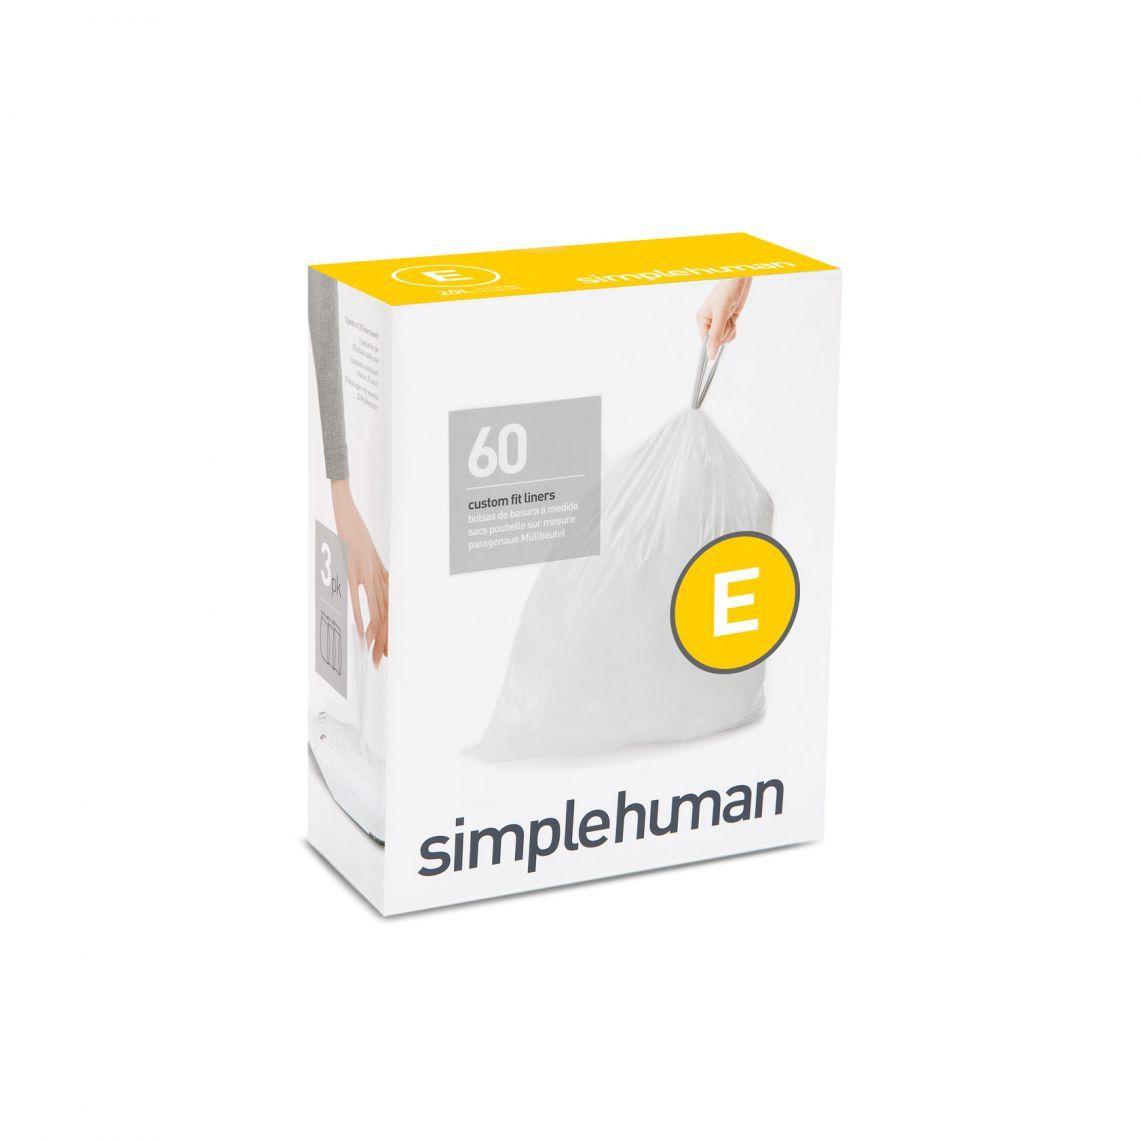 Simplehuman Logo - code E, custom fit can liners, 3 packs of 20